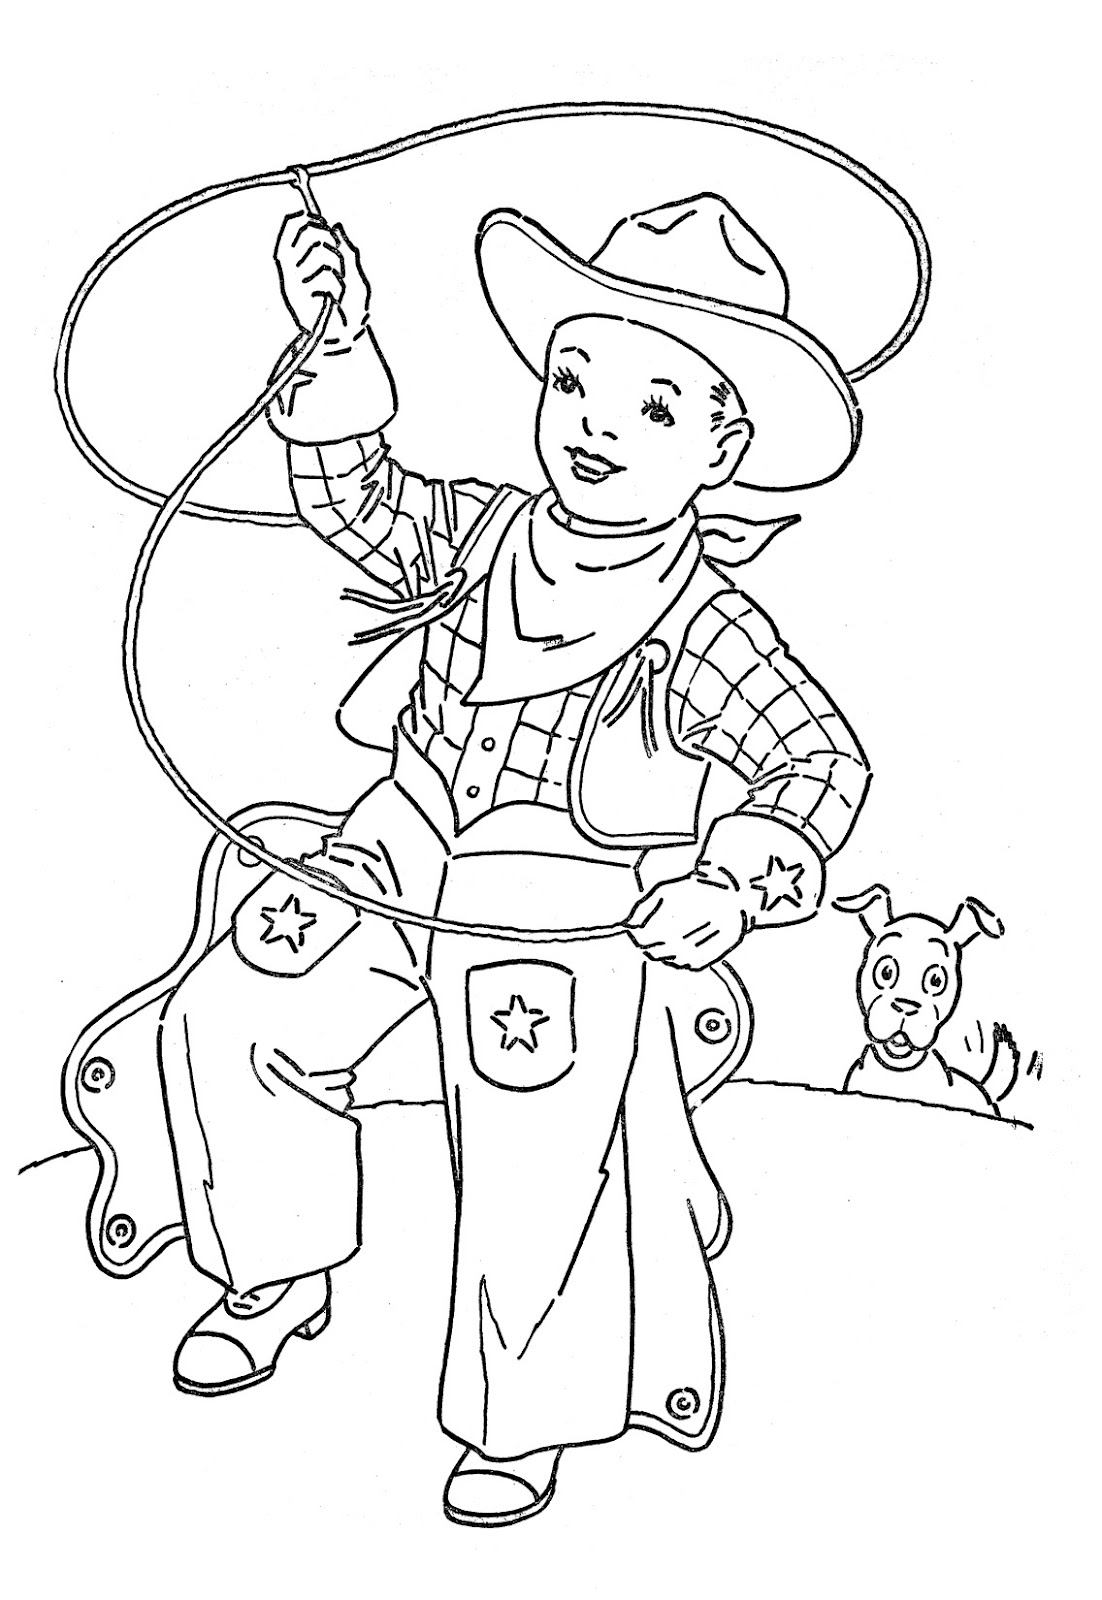 Cowboy Coloring Book Art, vintage clip art cute lil cowboy digi